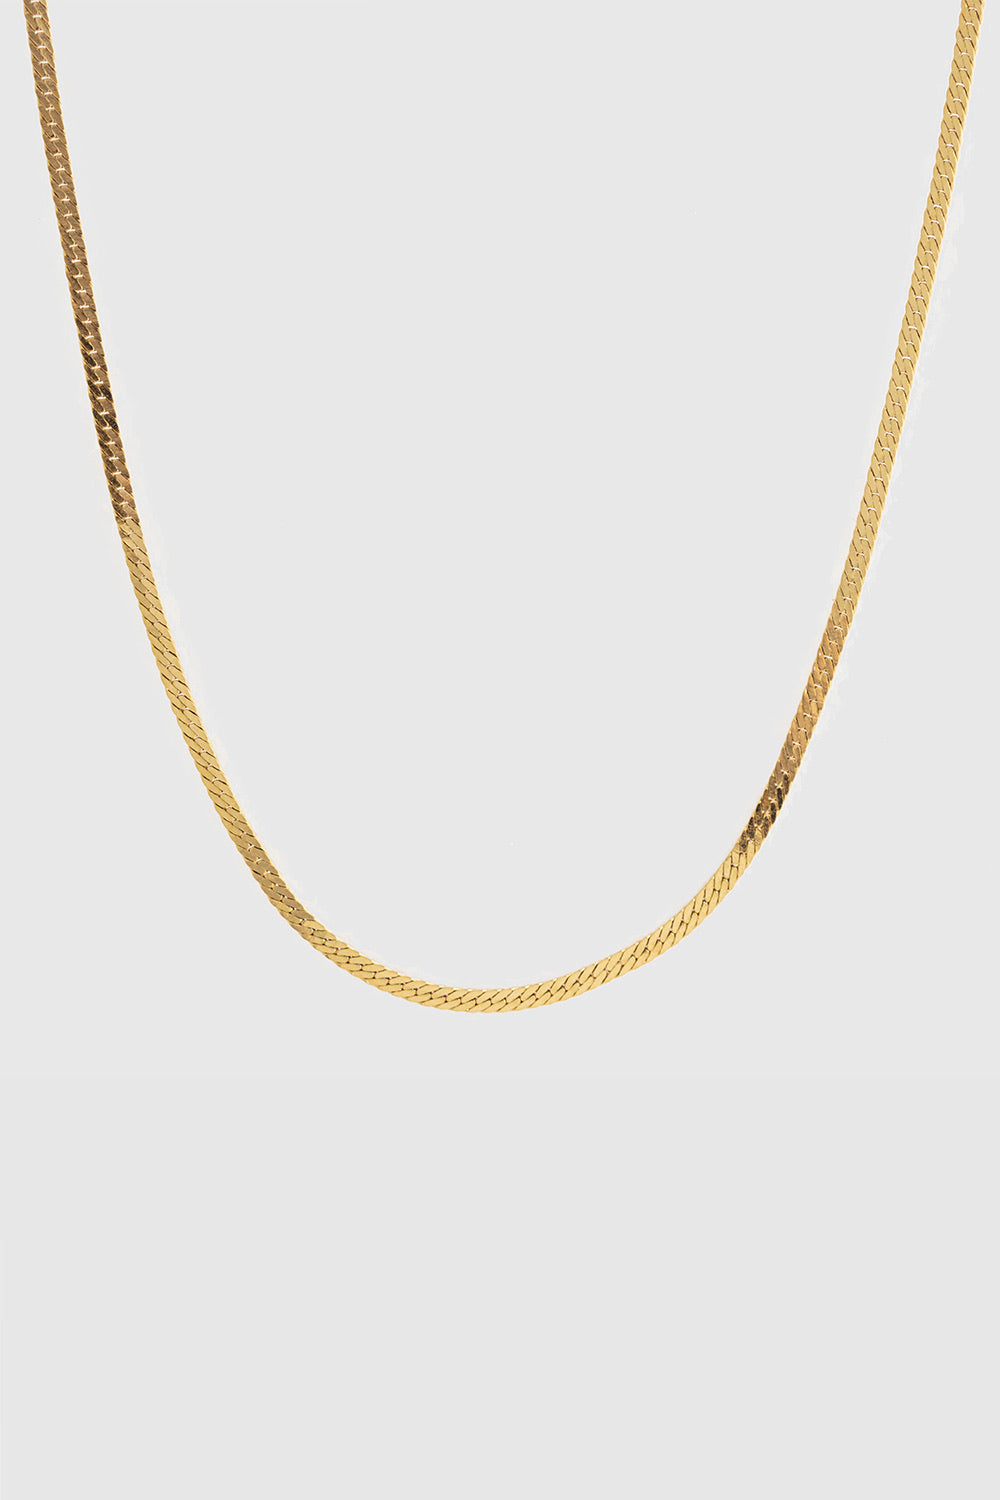 Herringbone Chain Gold Necklace